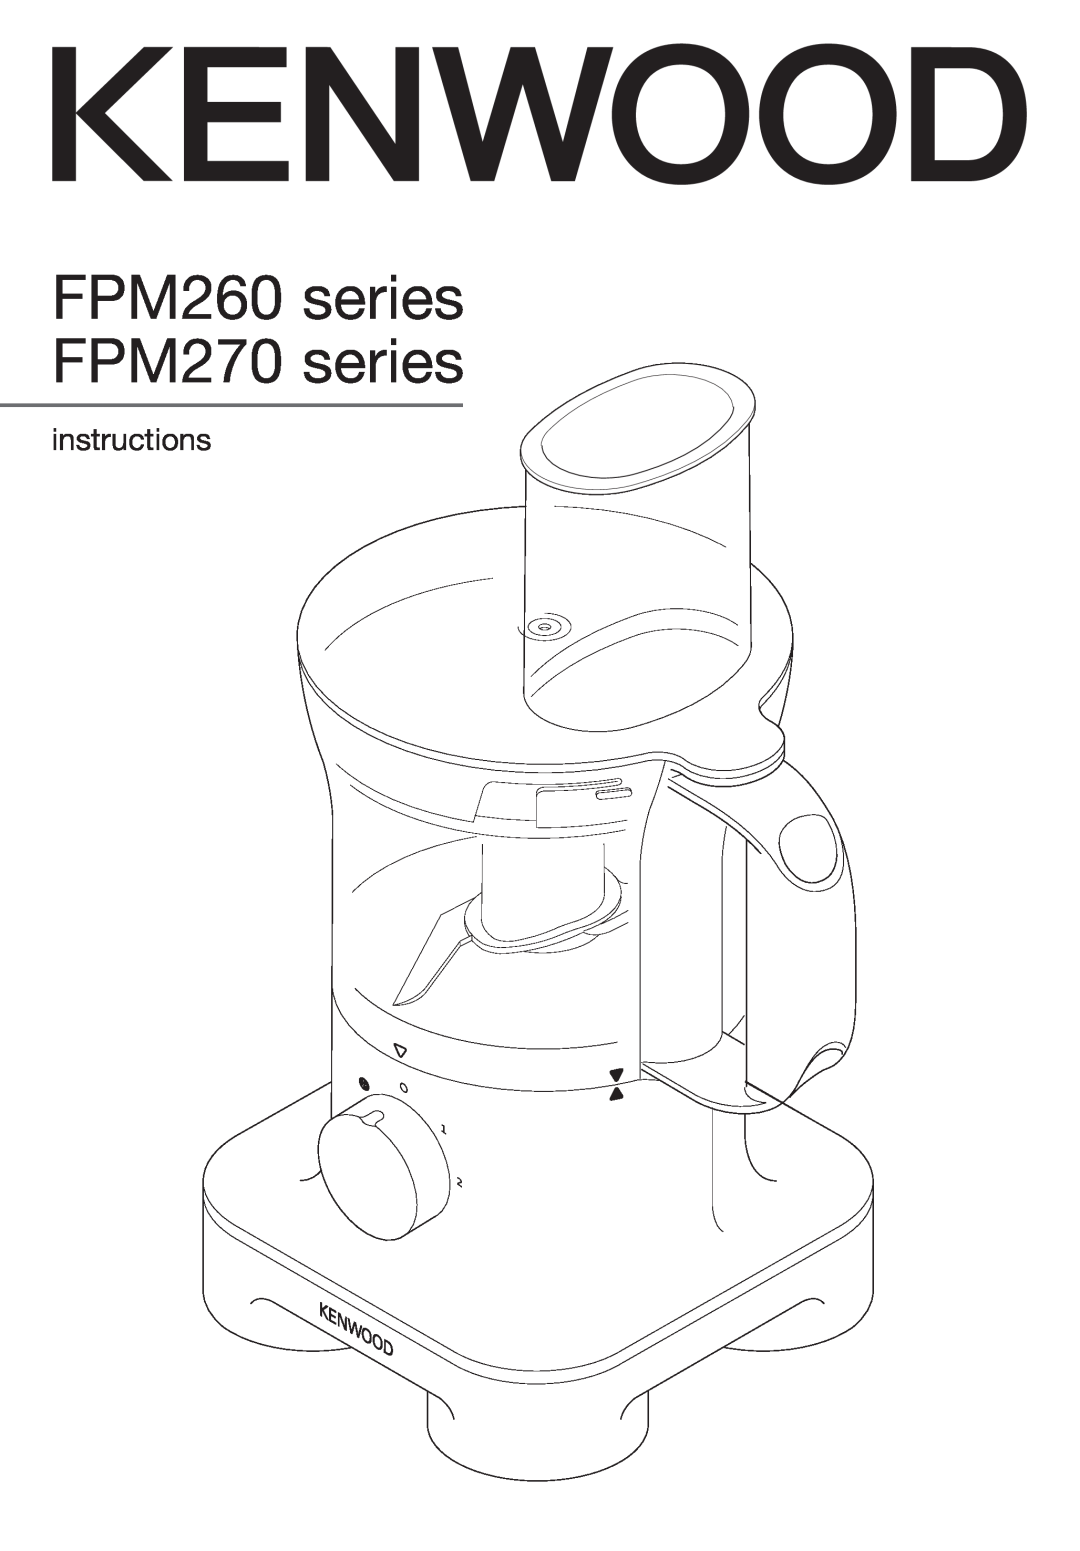 Kenwood manual instructions, FPM260 series FPM270 series 